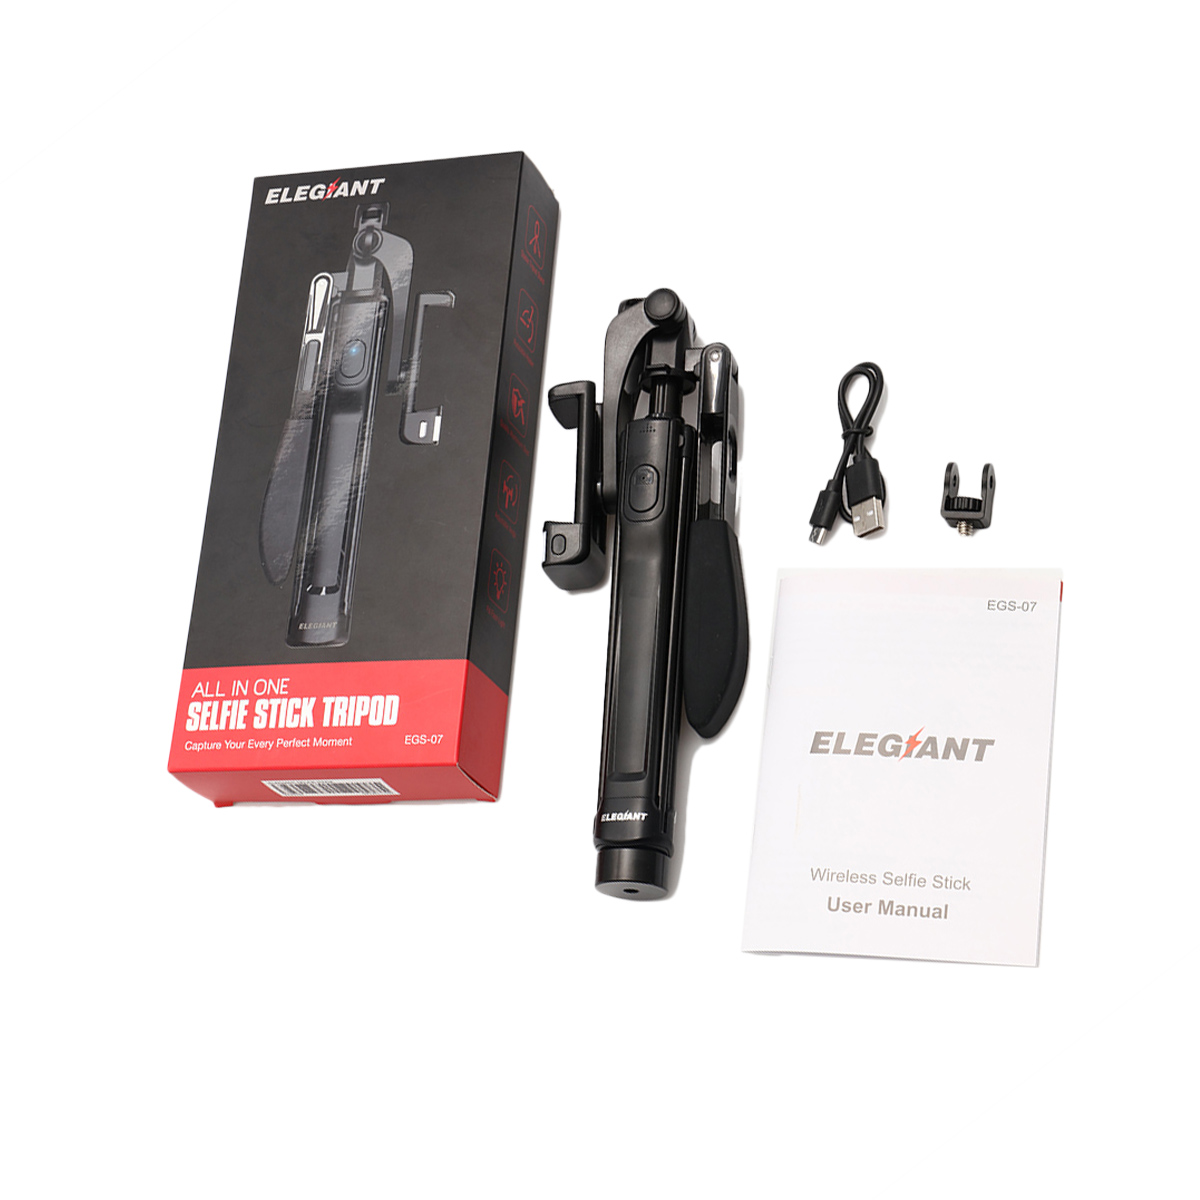 ELEGIANT-EGS-07-bluetooth-Selfie-Stick-Tripod-360deg-Balance-Handle-with-Remote-Control-for-Smartpho-1641285-10